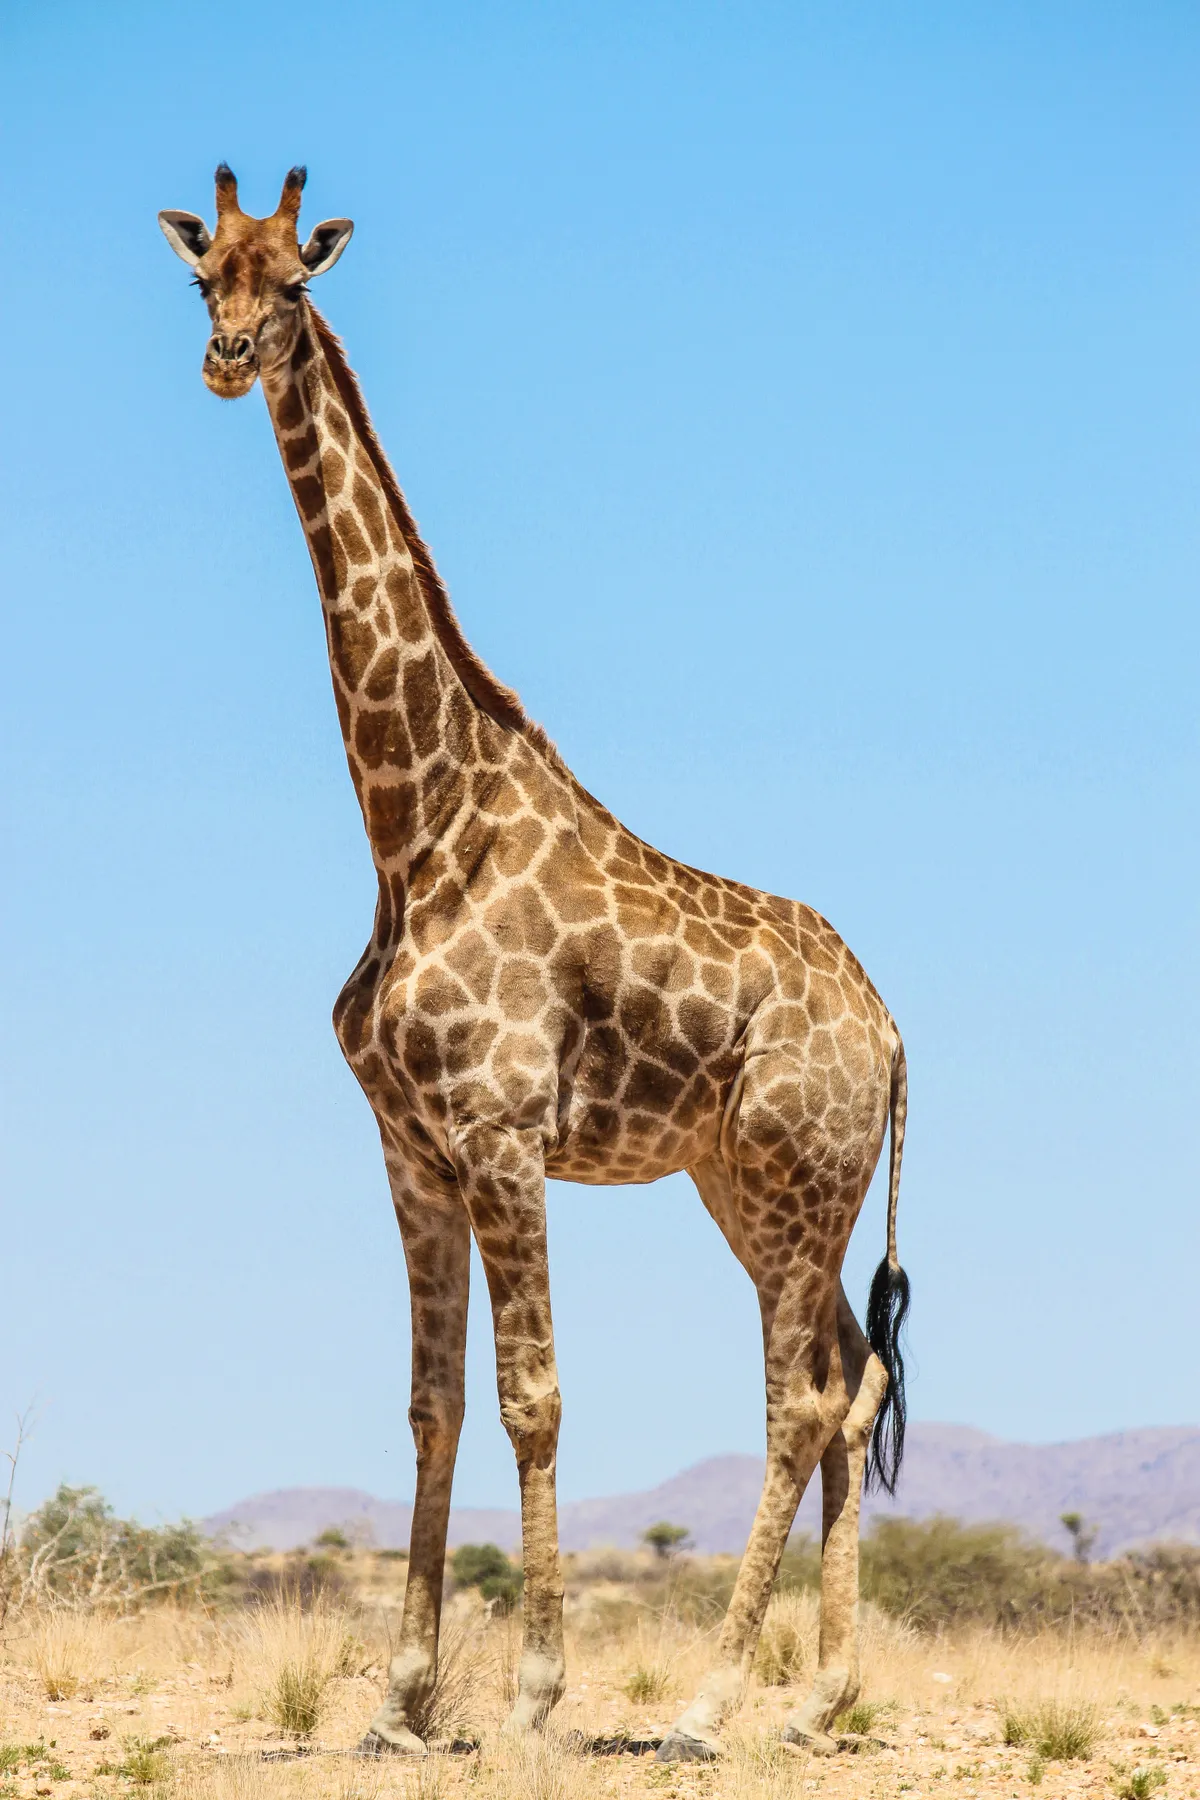 Full body giraffe portrait against a clear blue sky